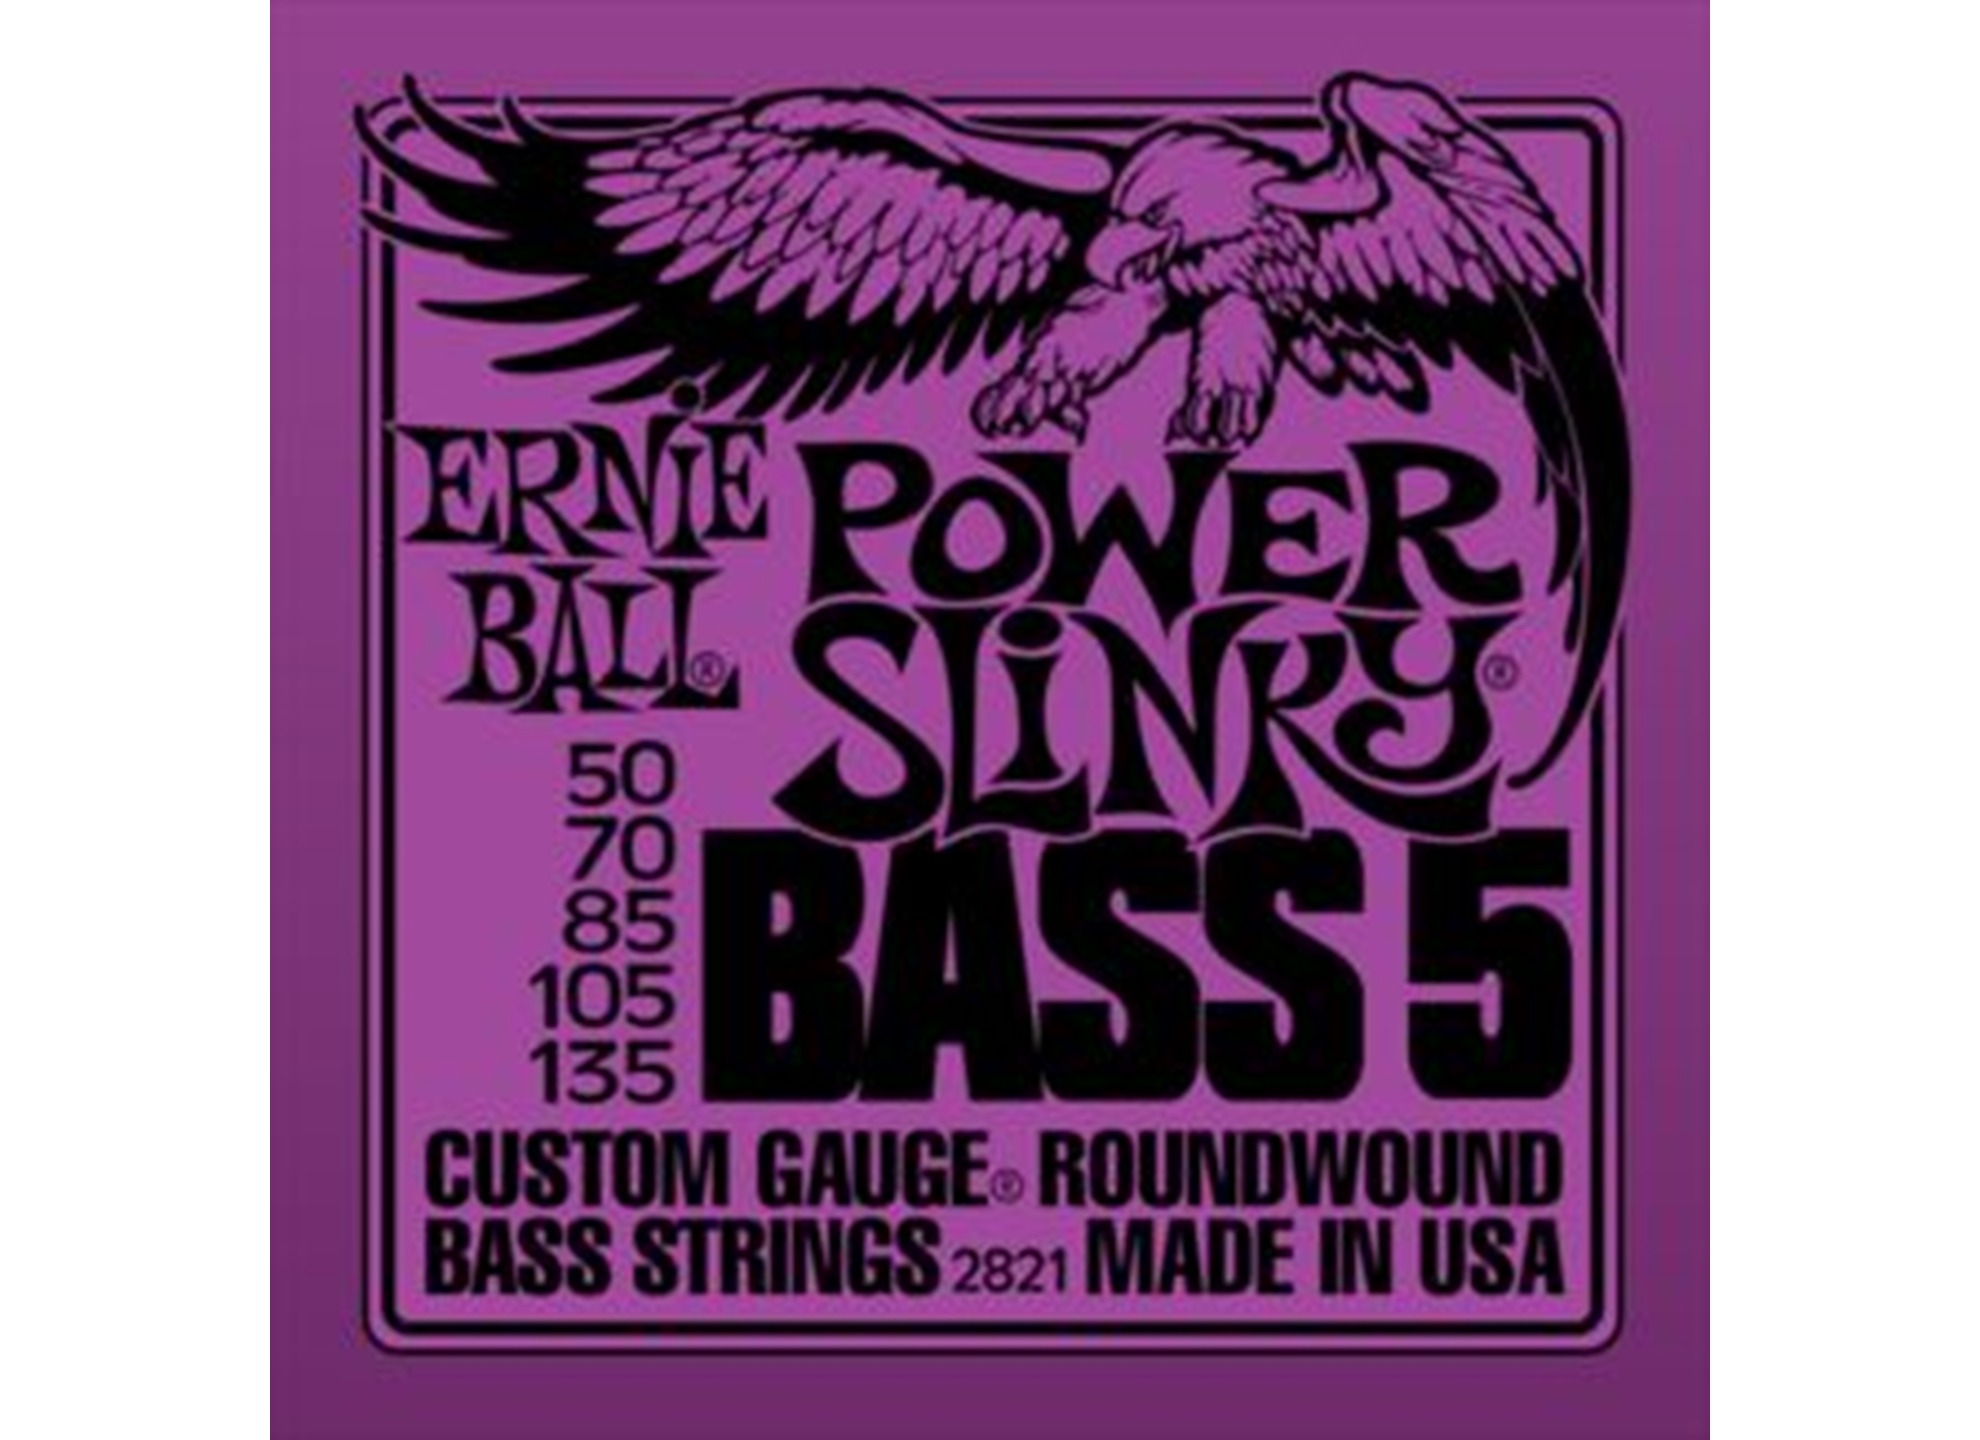 050-135 Power Slinky Bass 5-string Nickel Wound 2821